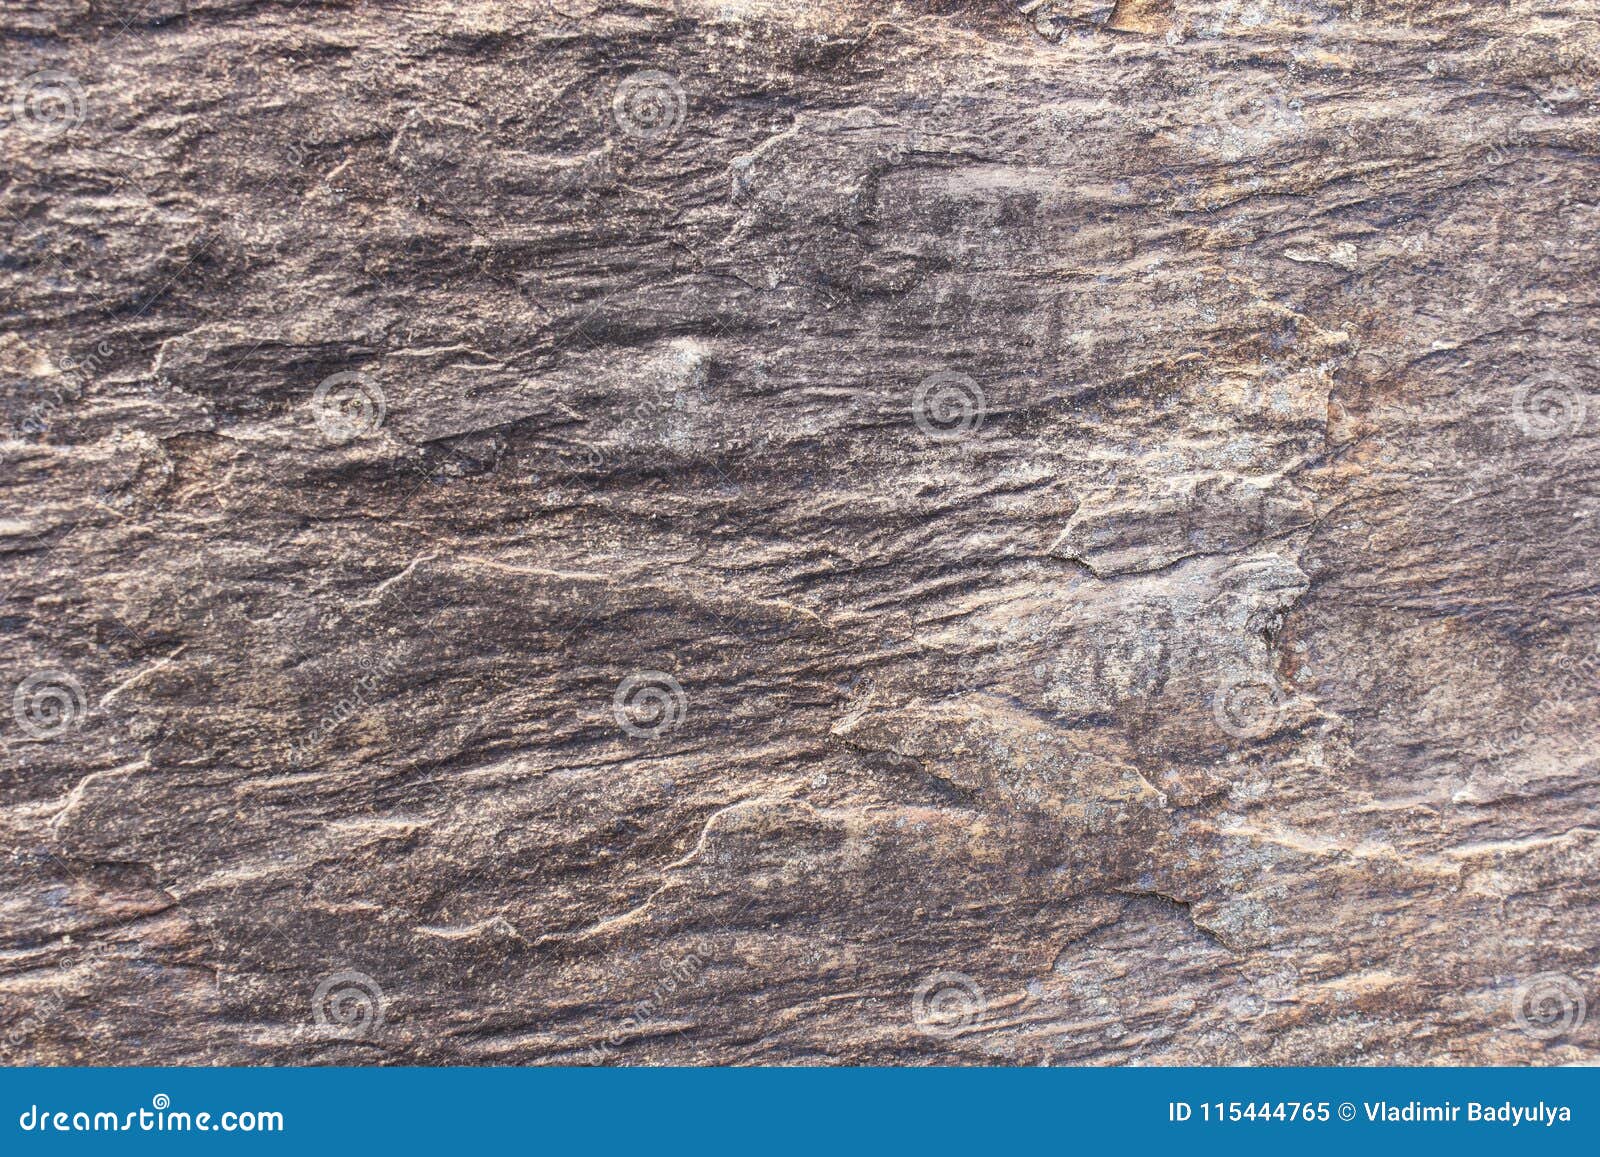 basalt stone texture